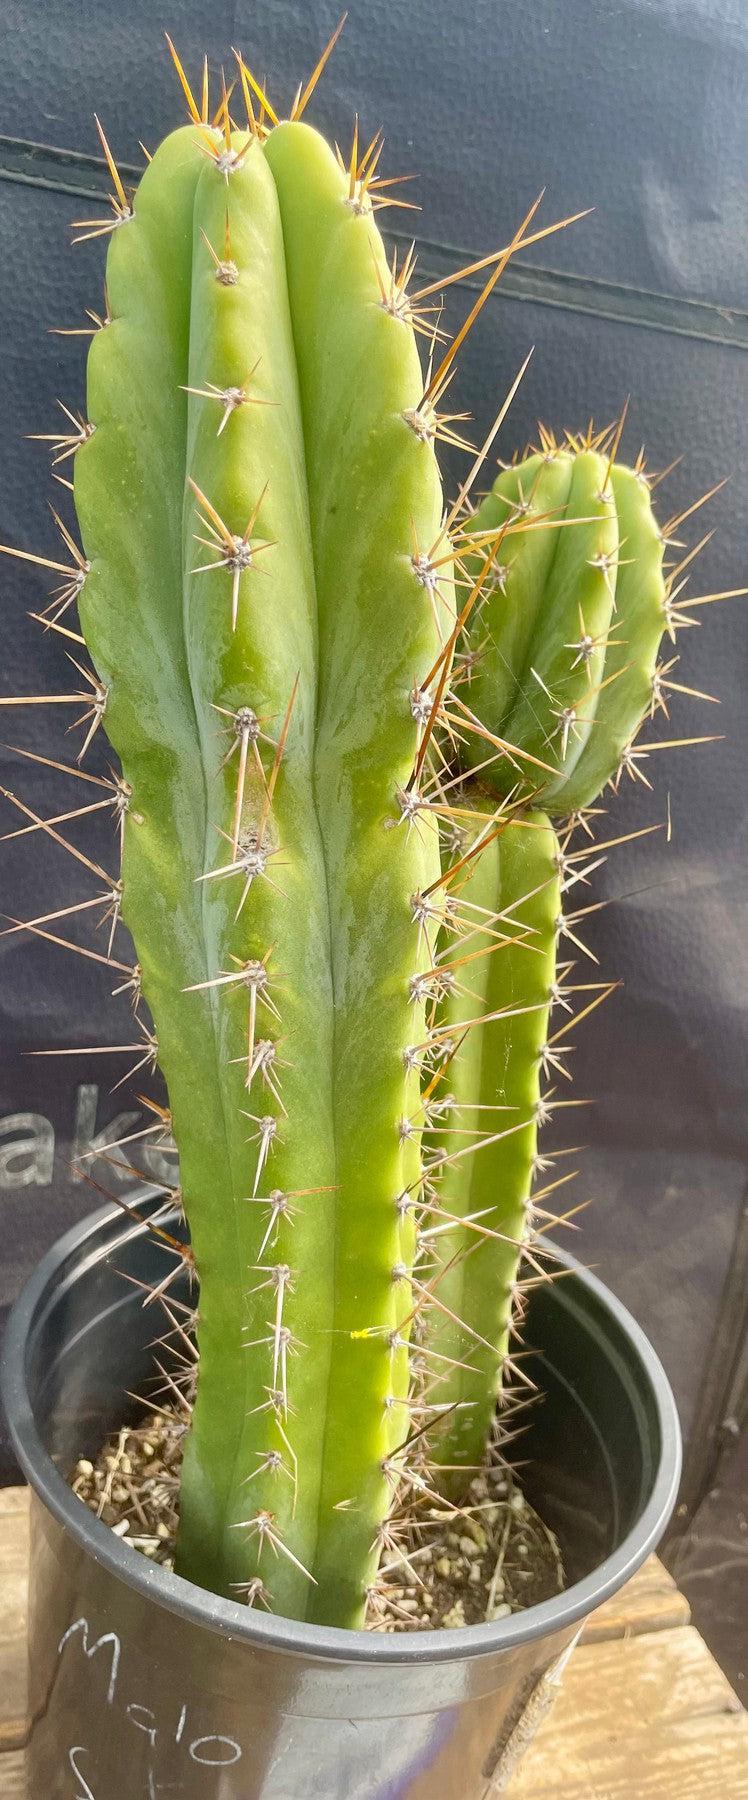 #EC173 EXACT Trichocereus Hybrid LumberJack X Macrogonus Ornamental Cactus 13”-Cactus - Large - Exact-The Succulent Source